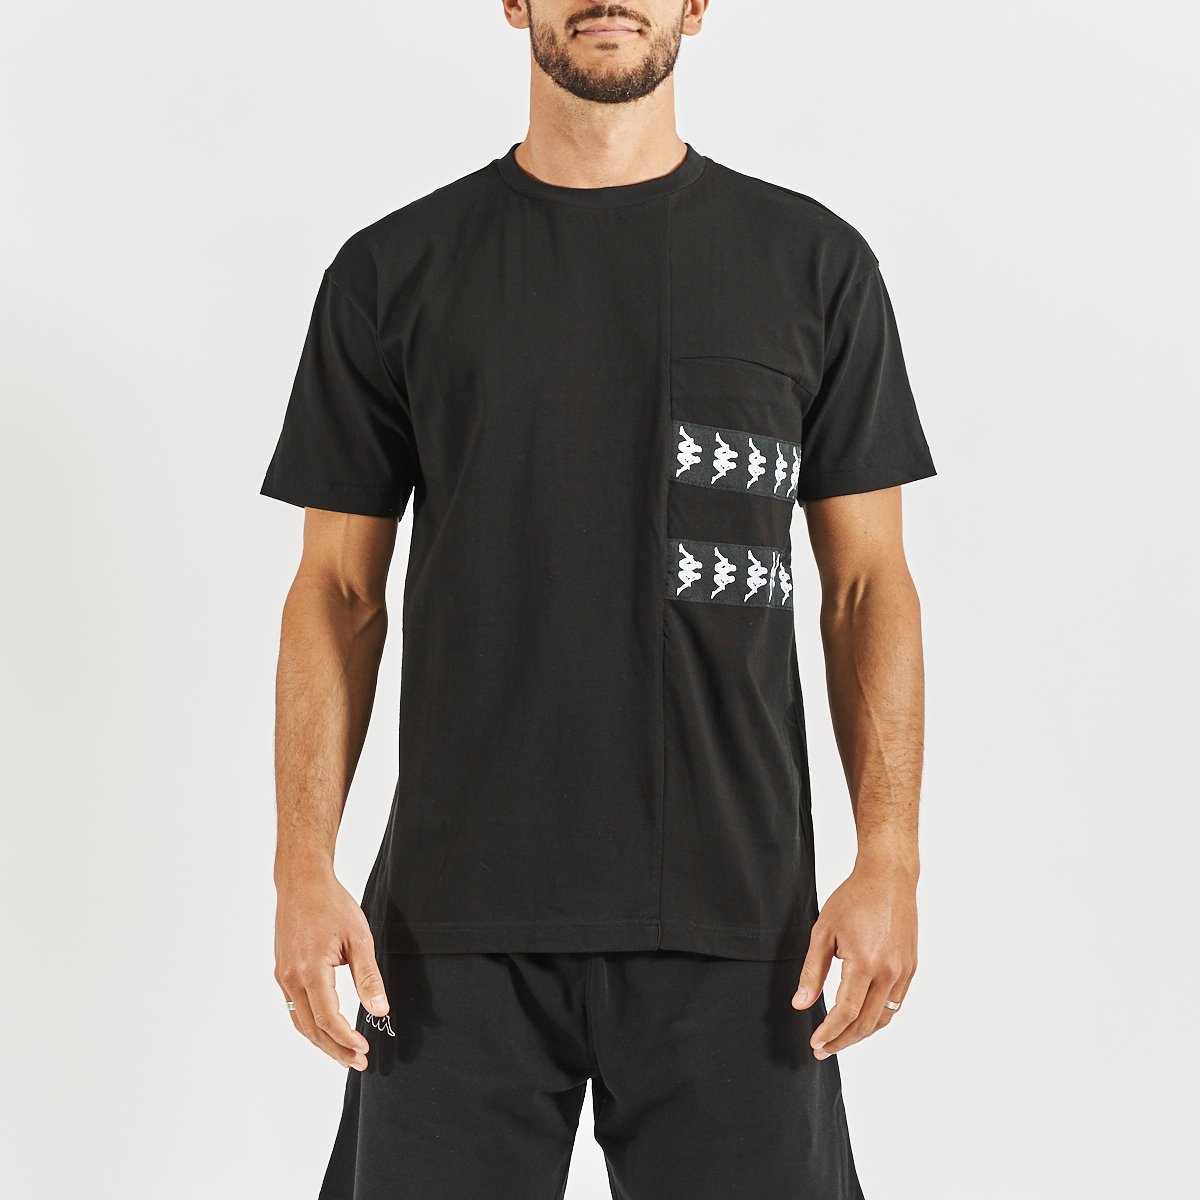 Camiseta Efto hombre negro - Imagen 1